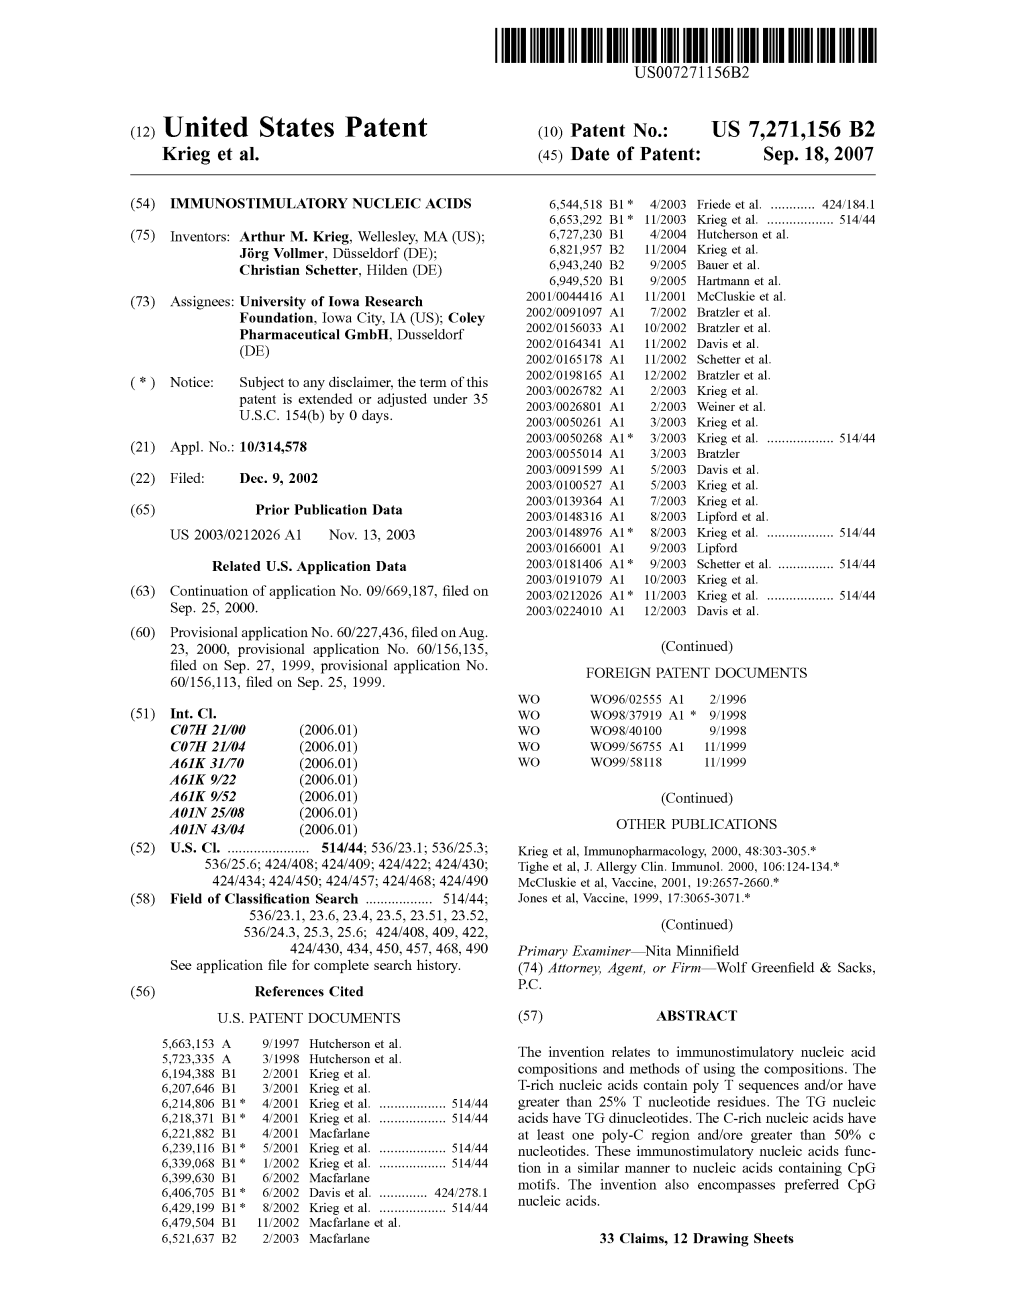 (12) United States Patent (10) Patent No.: US 7,271,156 B2 Krieg Et Al